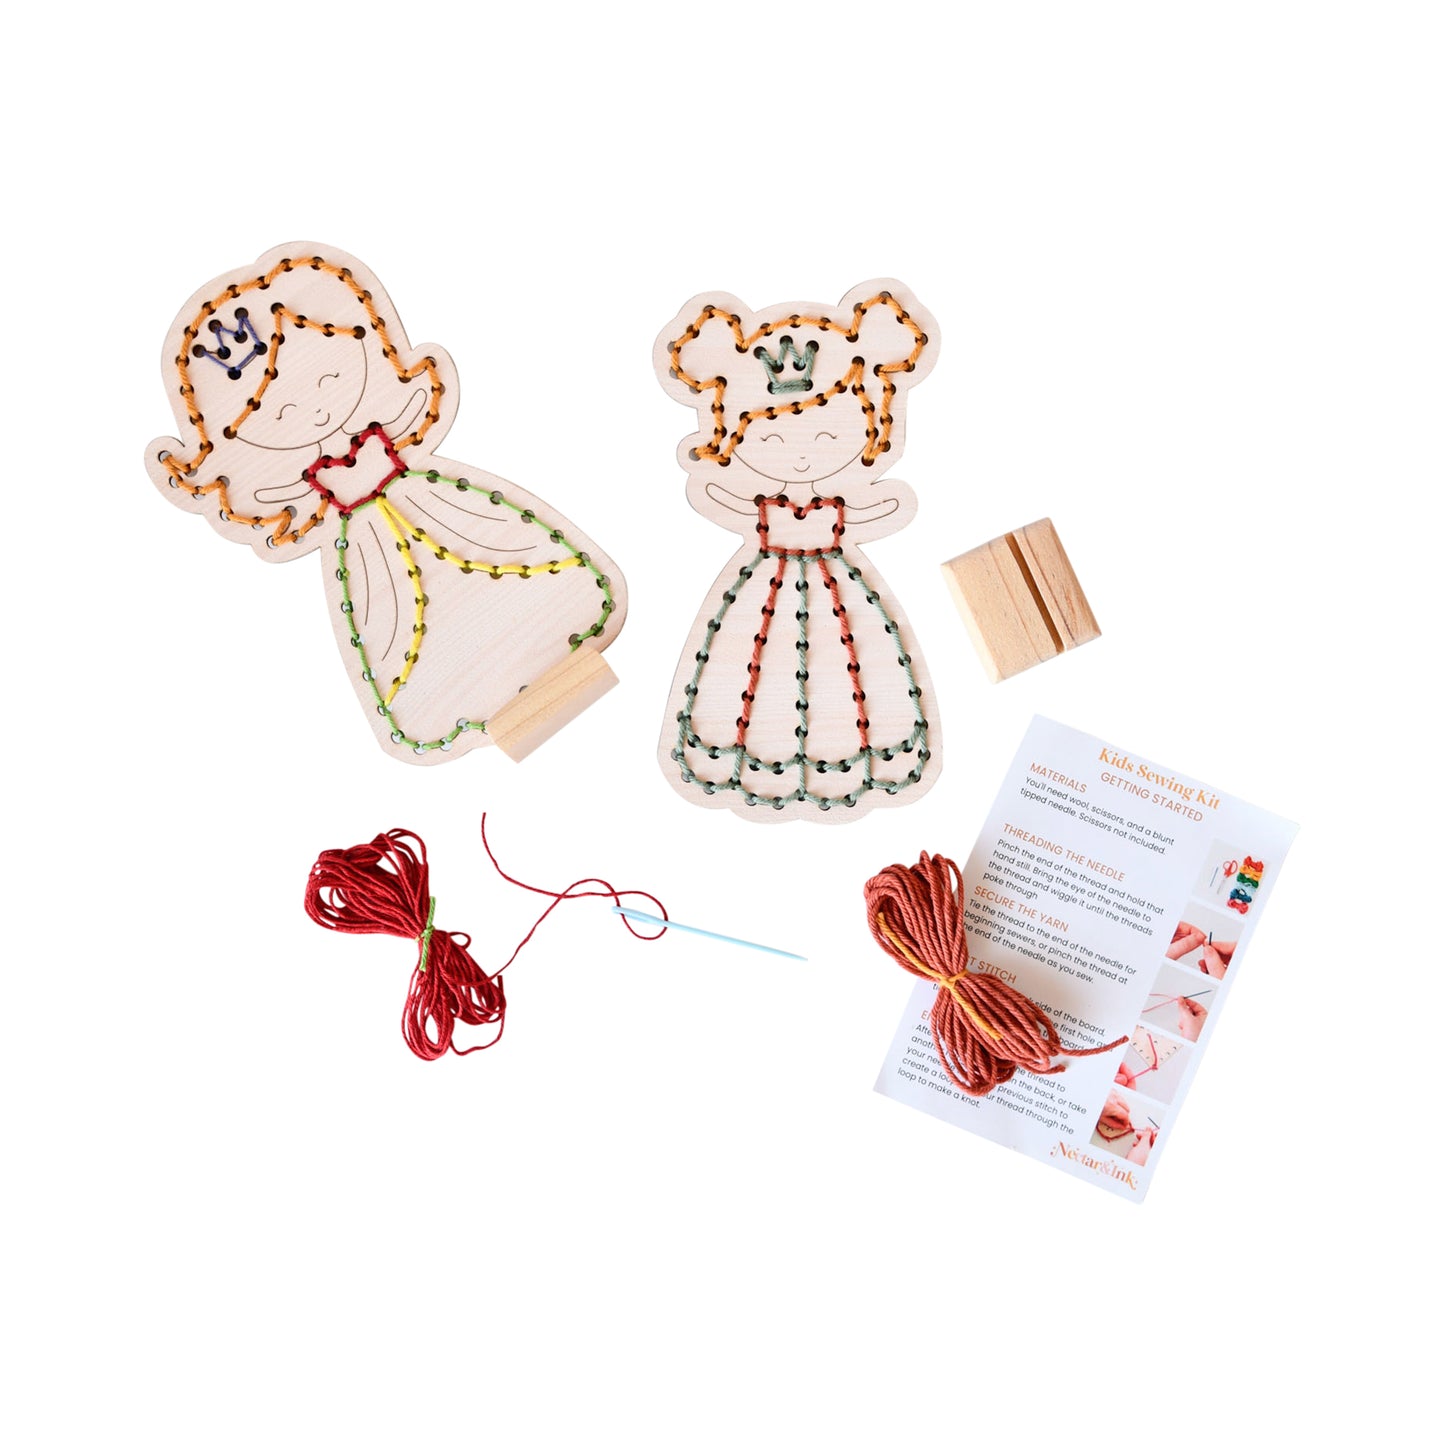 Sewing Craft Kit | Princess